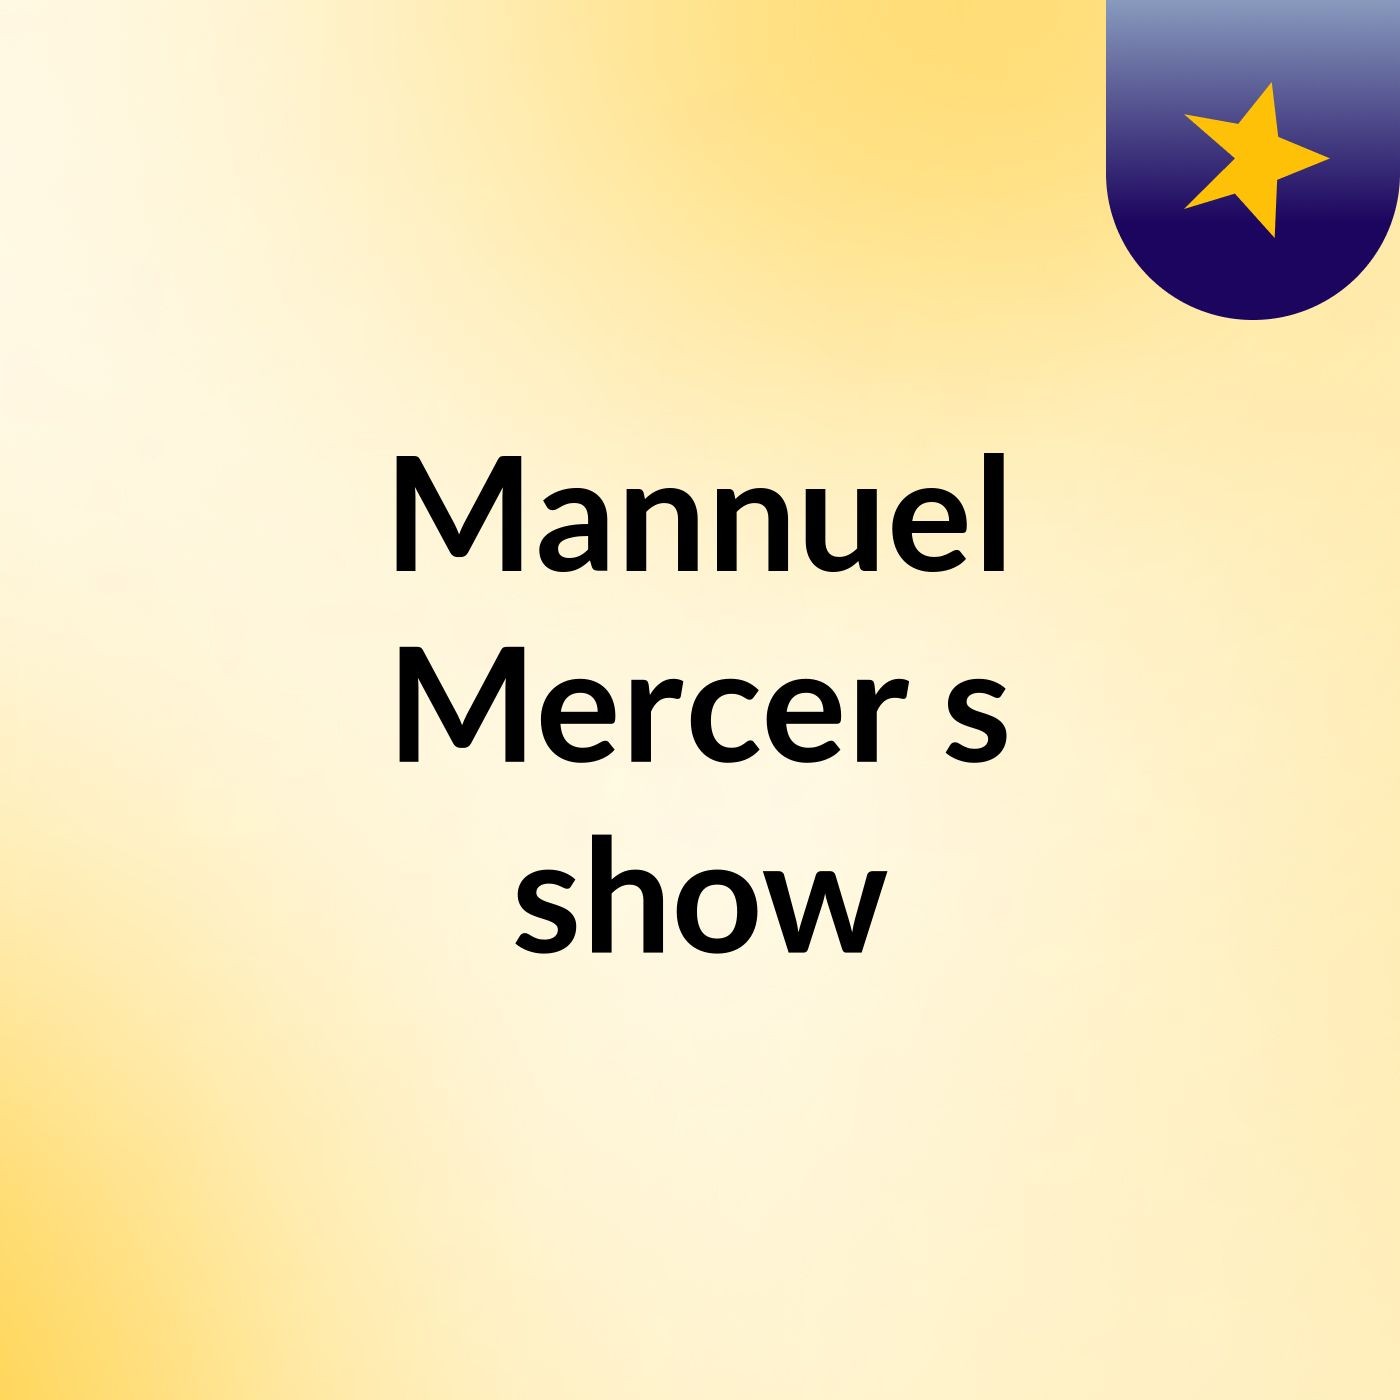 Episode 3 - Mannuel Mercer's show